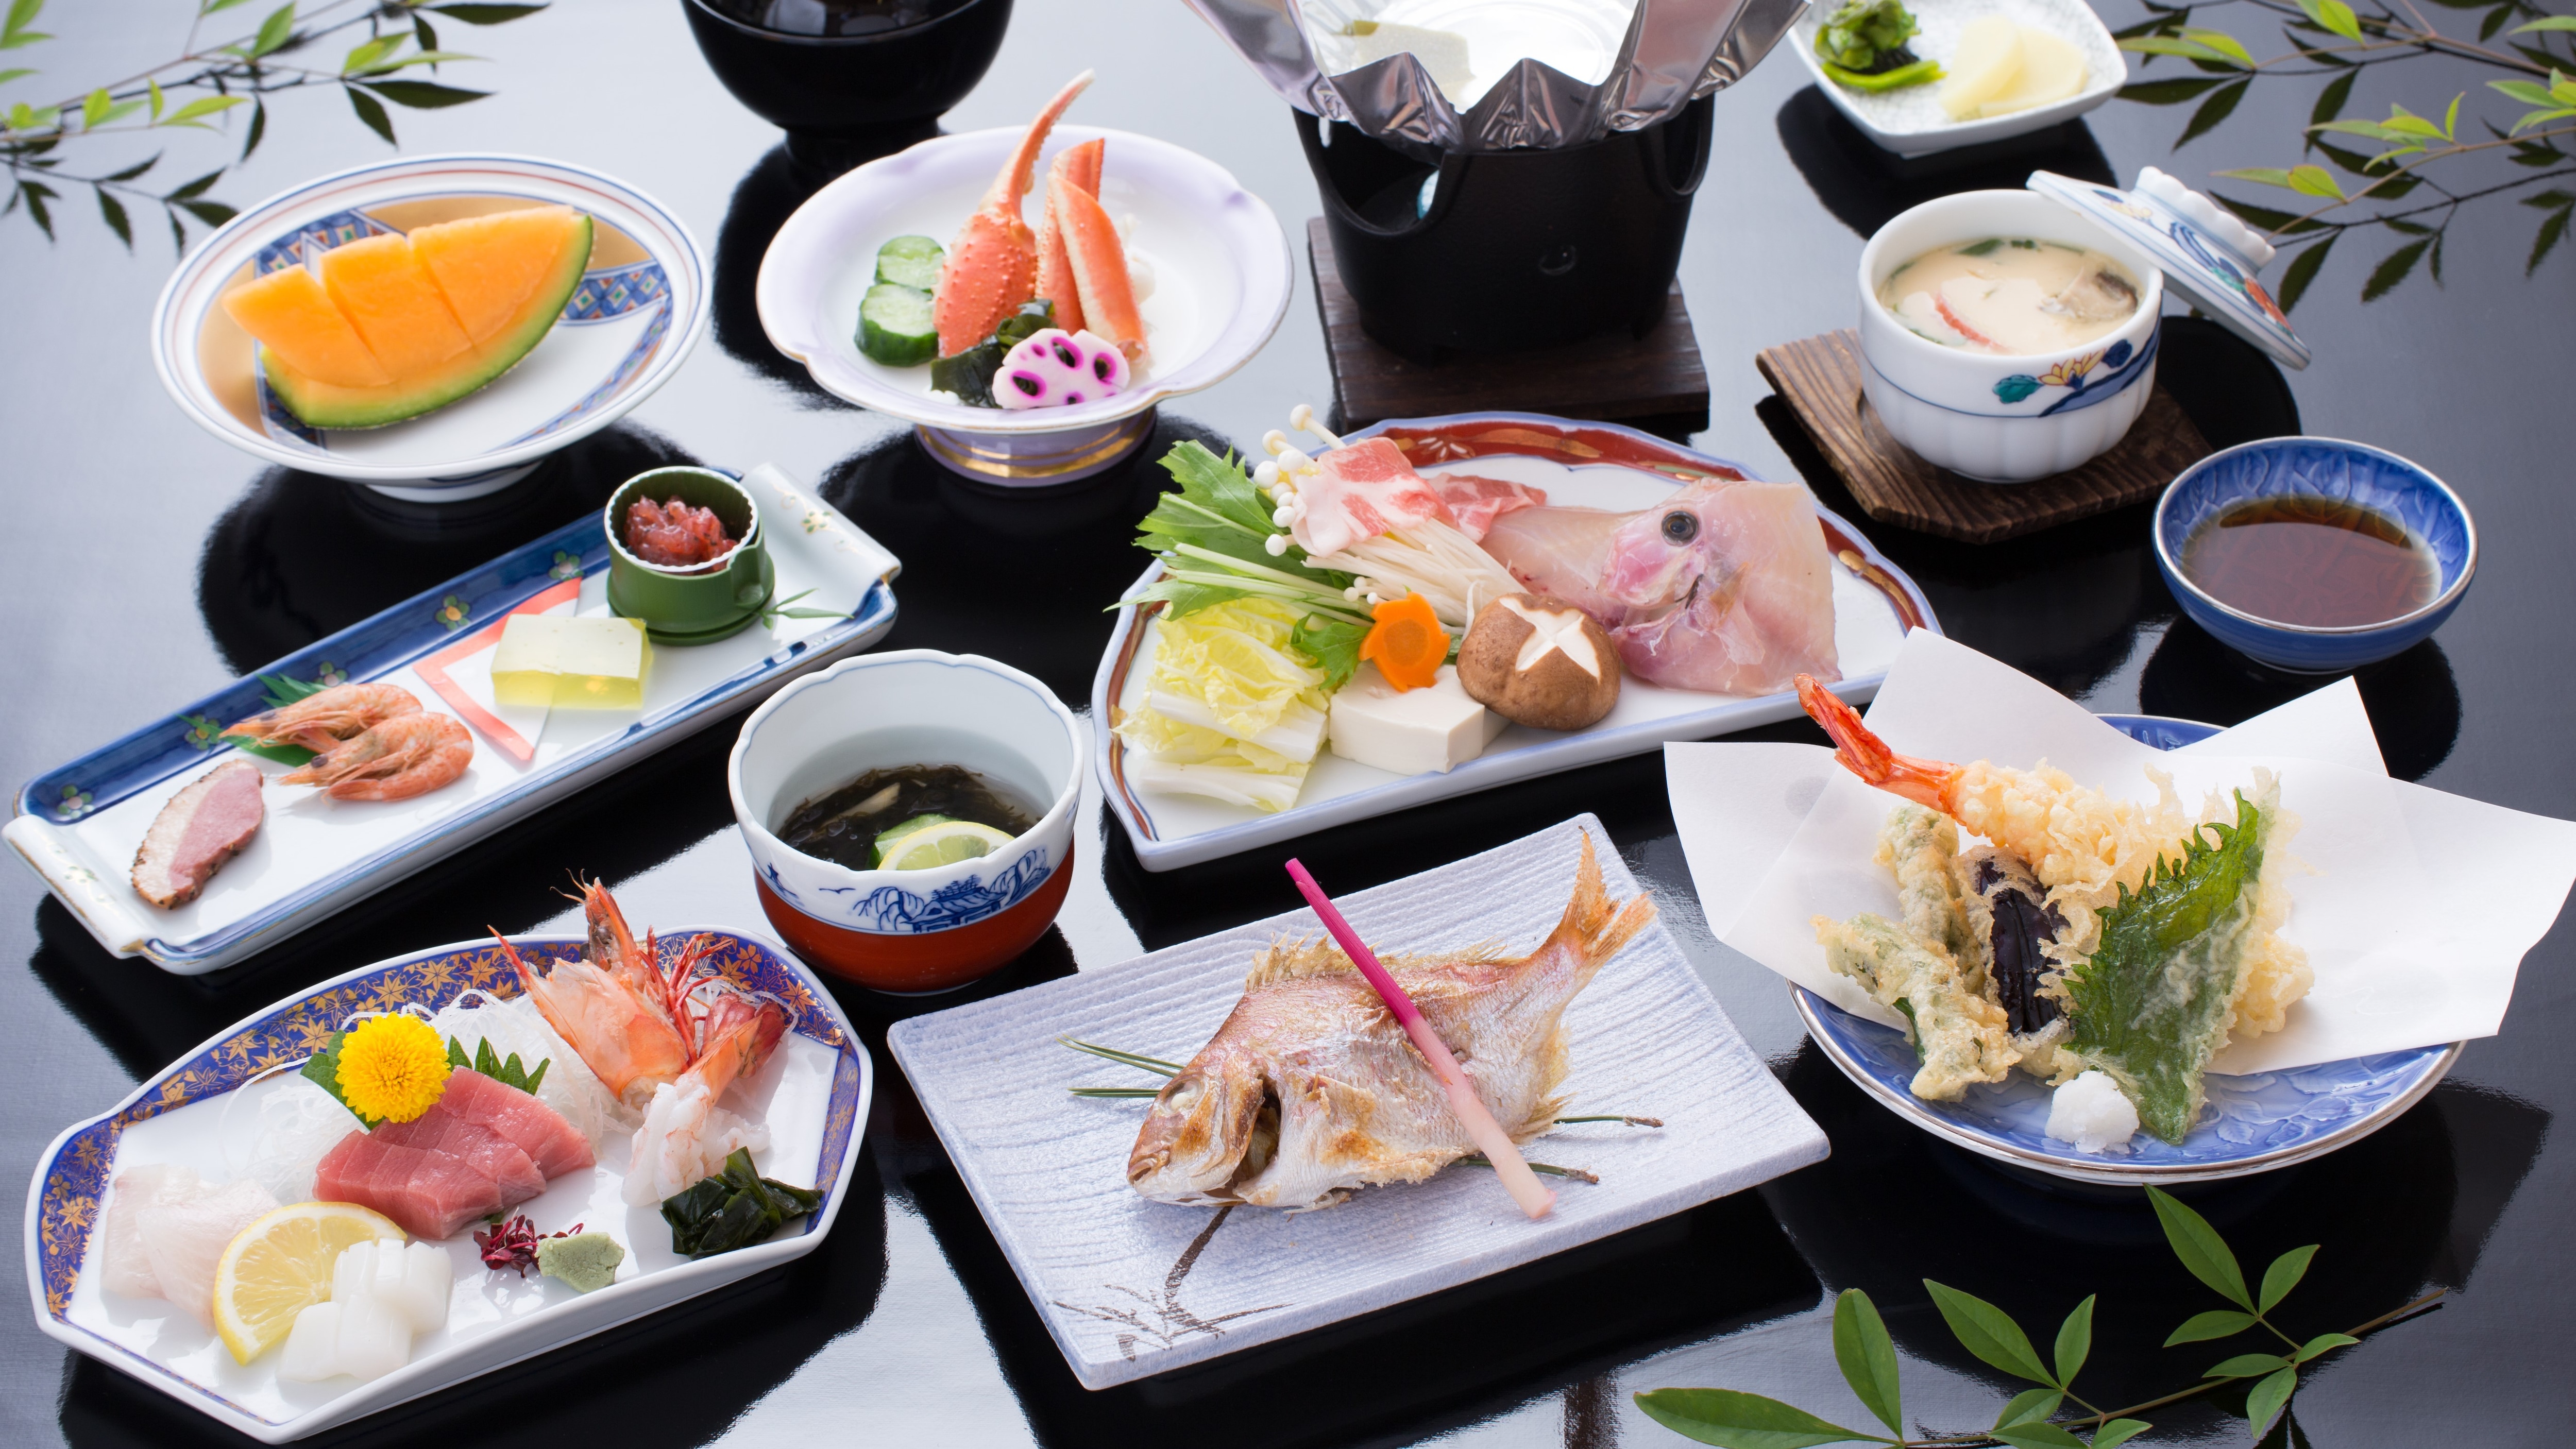 ◆ Setouchi อาหารทะเล kaiseki อาหารทะเล (ภาพเป็นตัวอย่าง เราจะเตรียมส่วนผสมตามฤดูกาล)